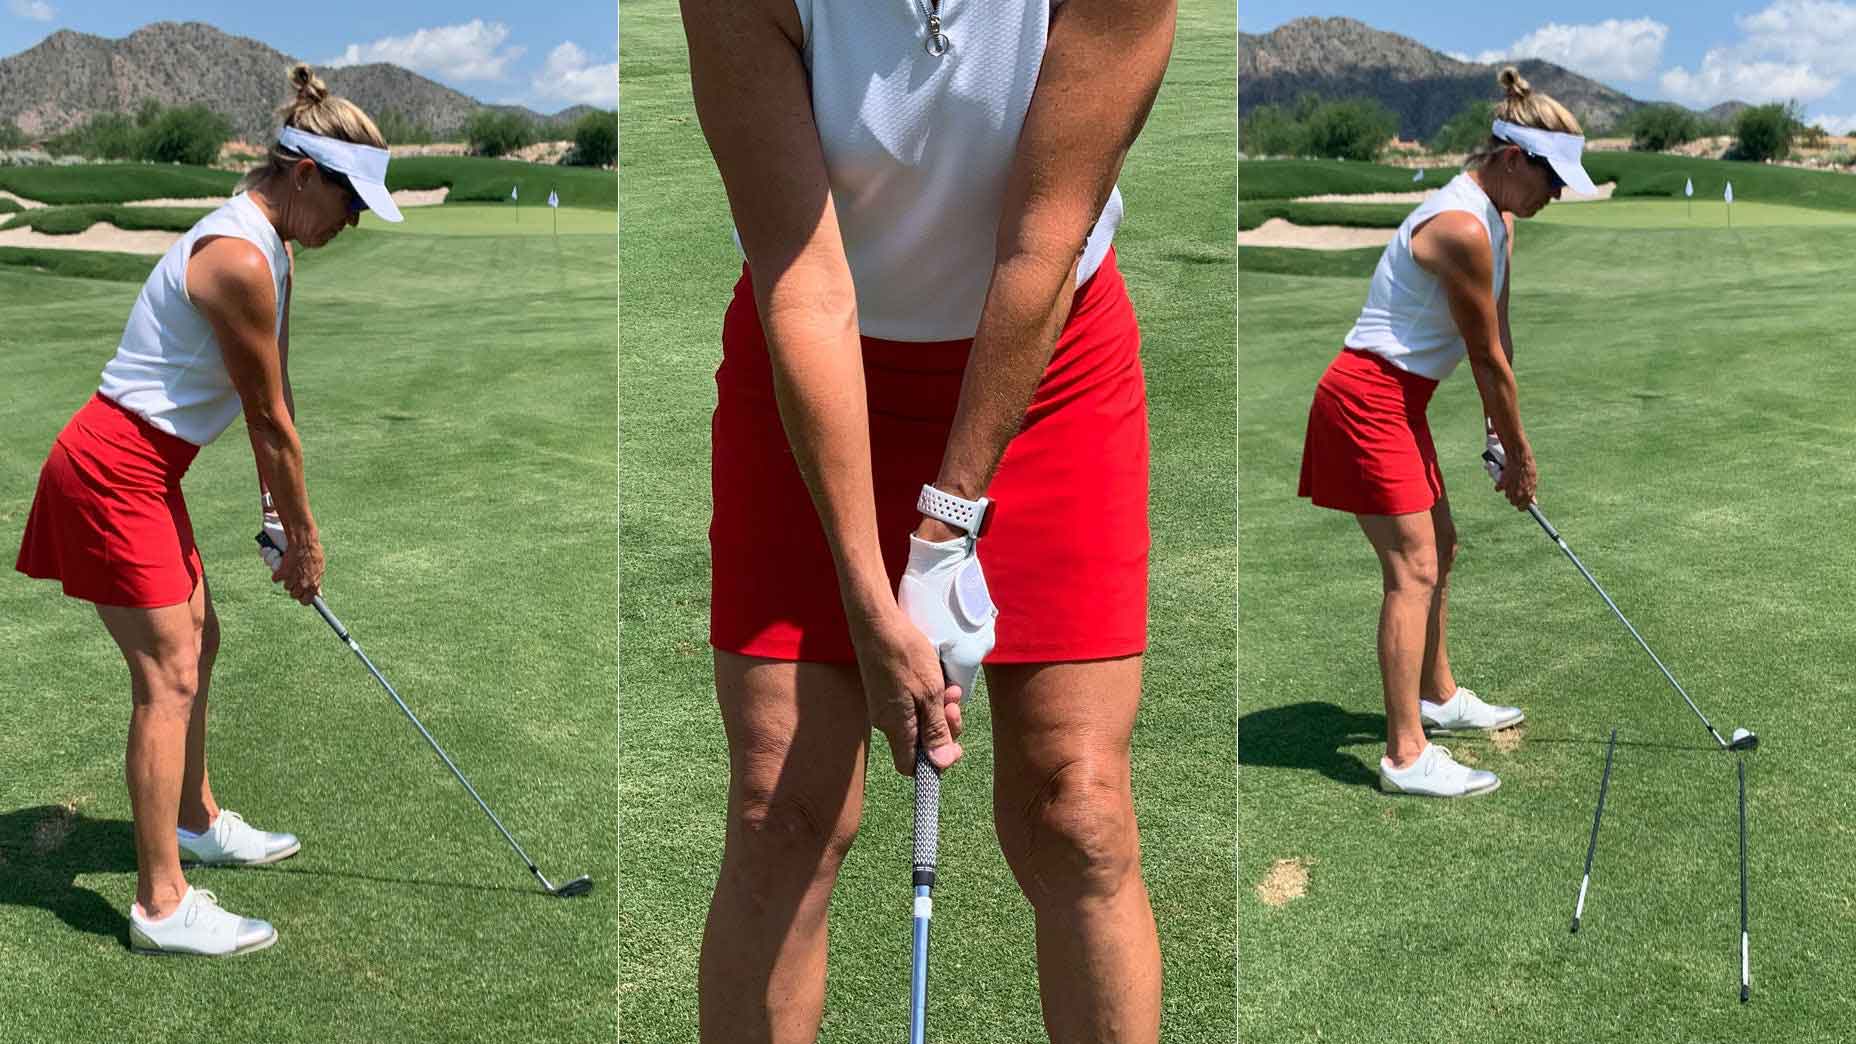 https://golf.com/wp-content/uploads/2021/12/Edie-posture-grip-alignment.jpg